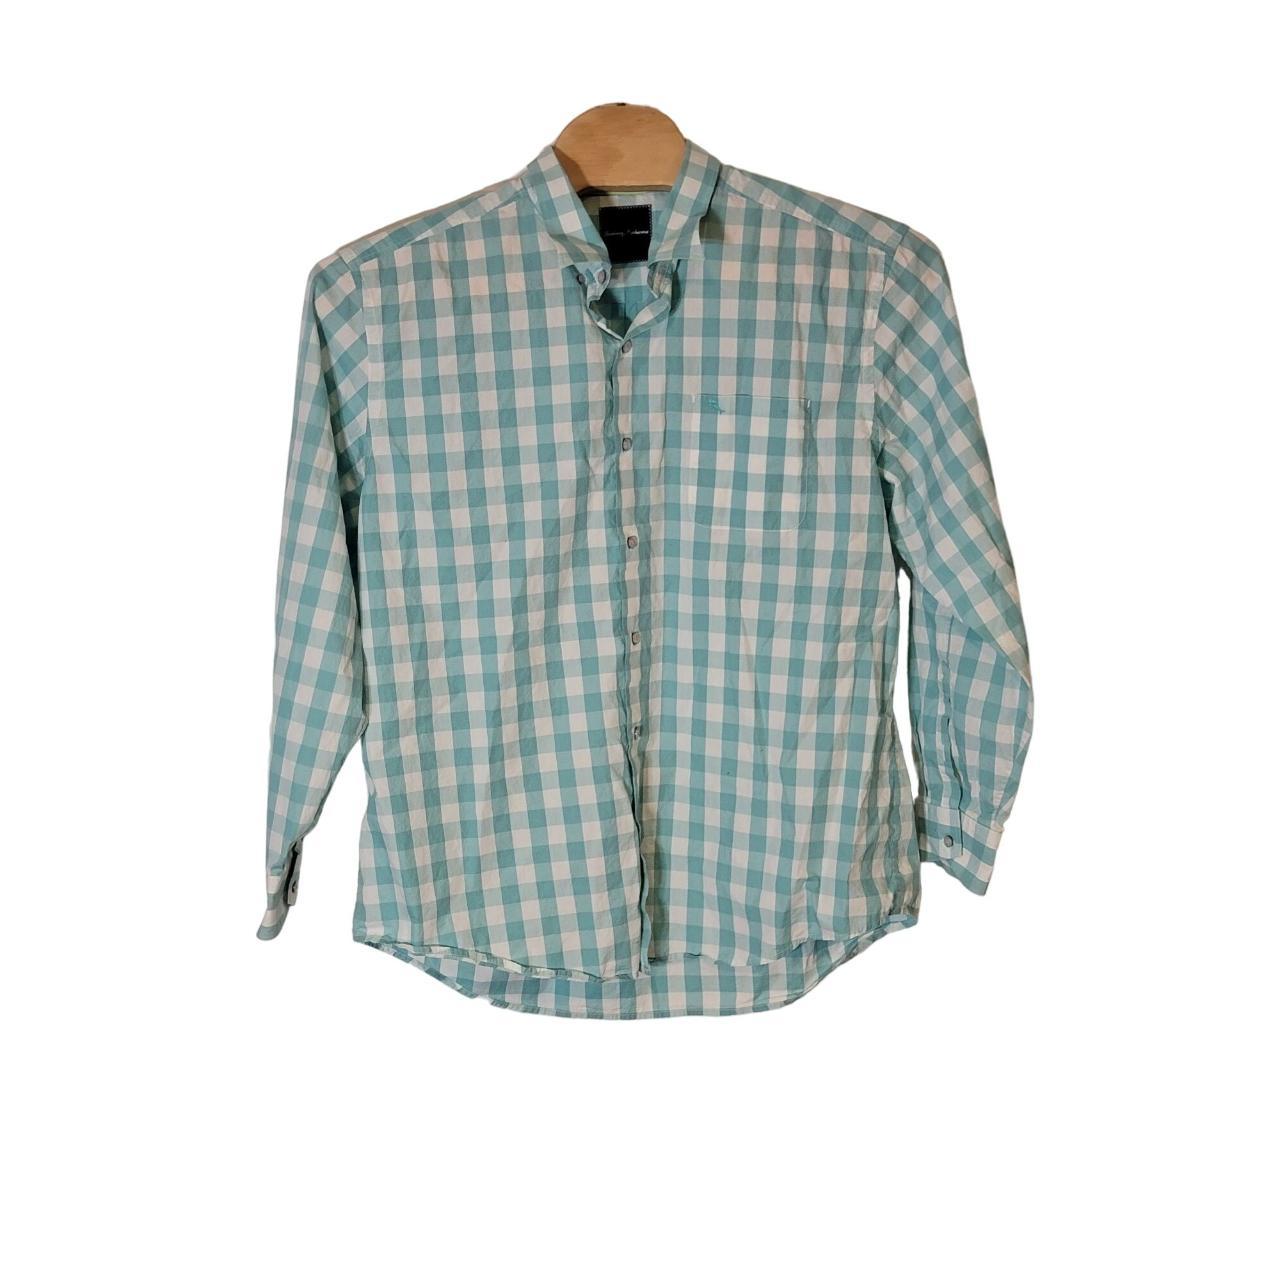 This Tommy Bahama Checkered Long Sleeve Shirt... - Depop